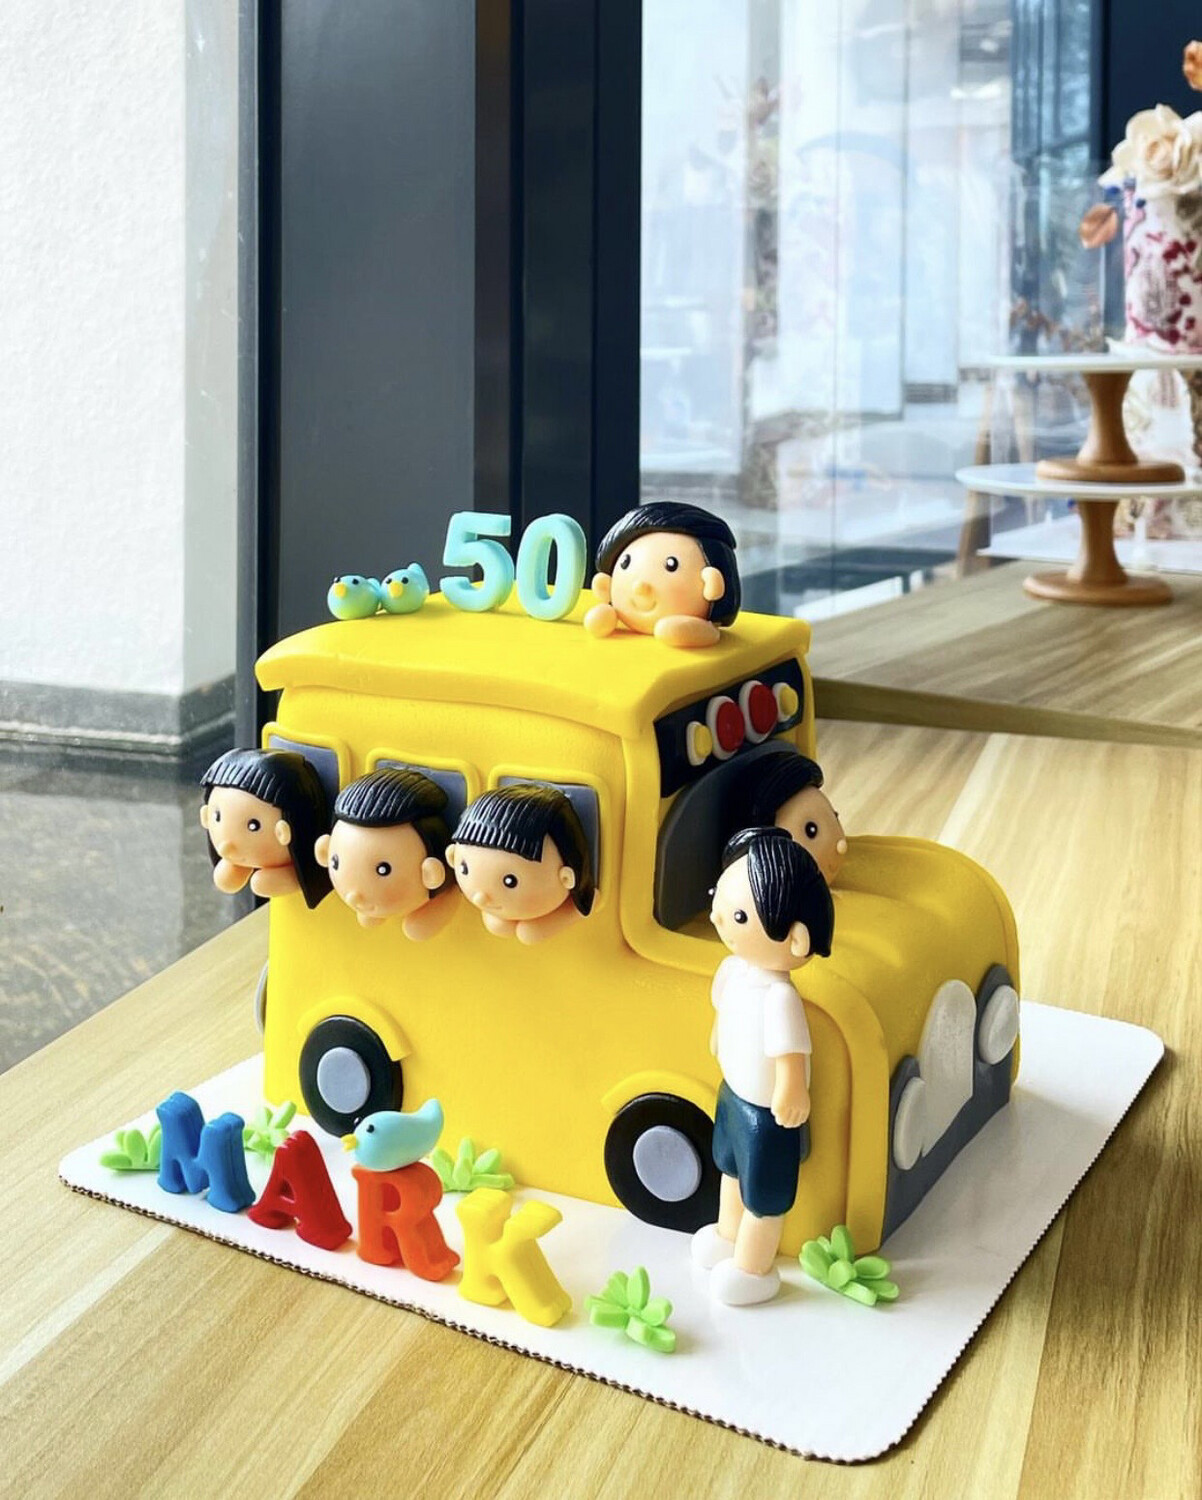 Bus Cake 1 - School